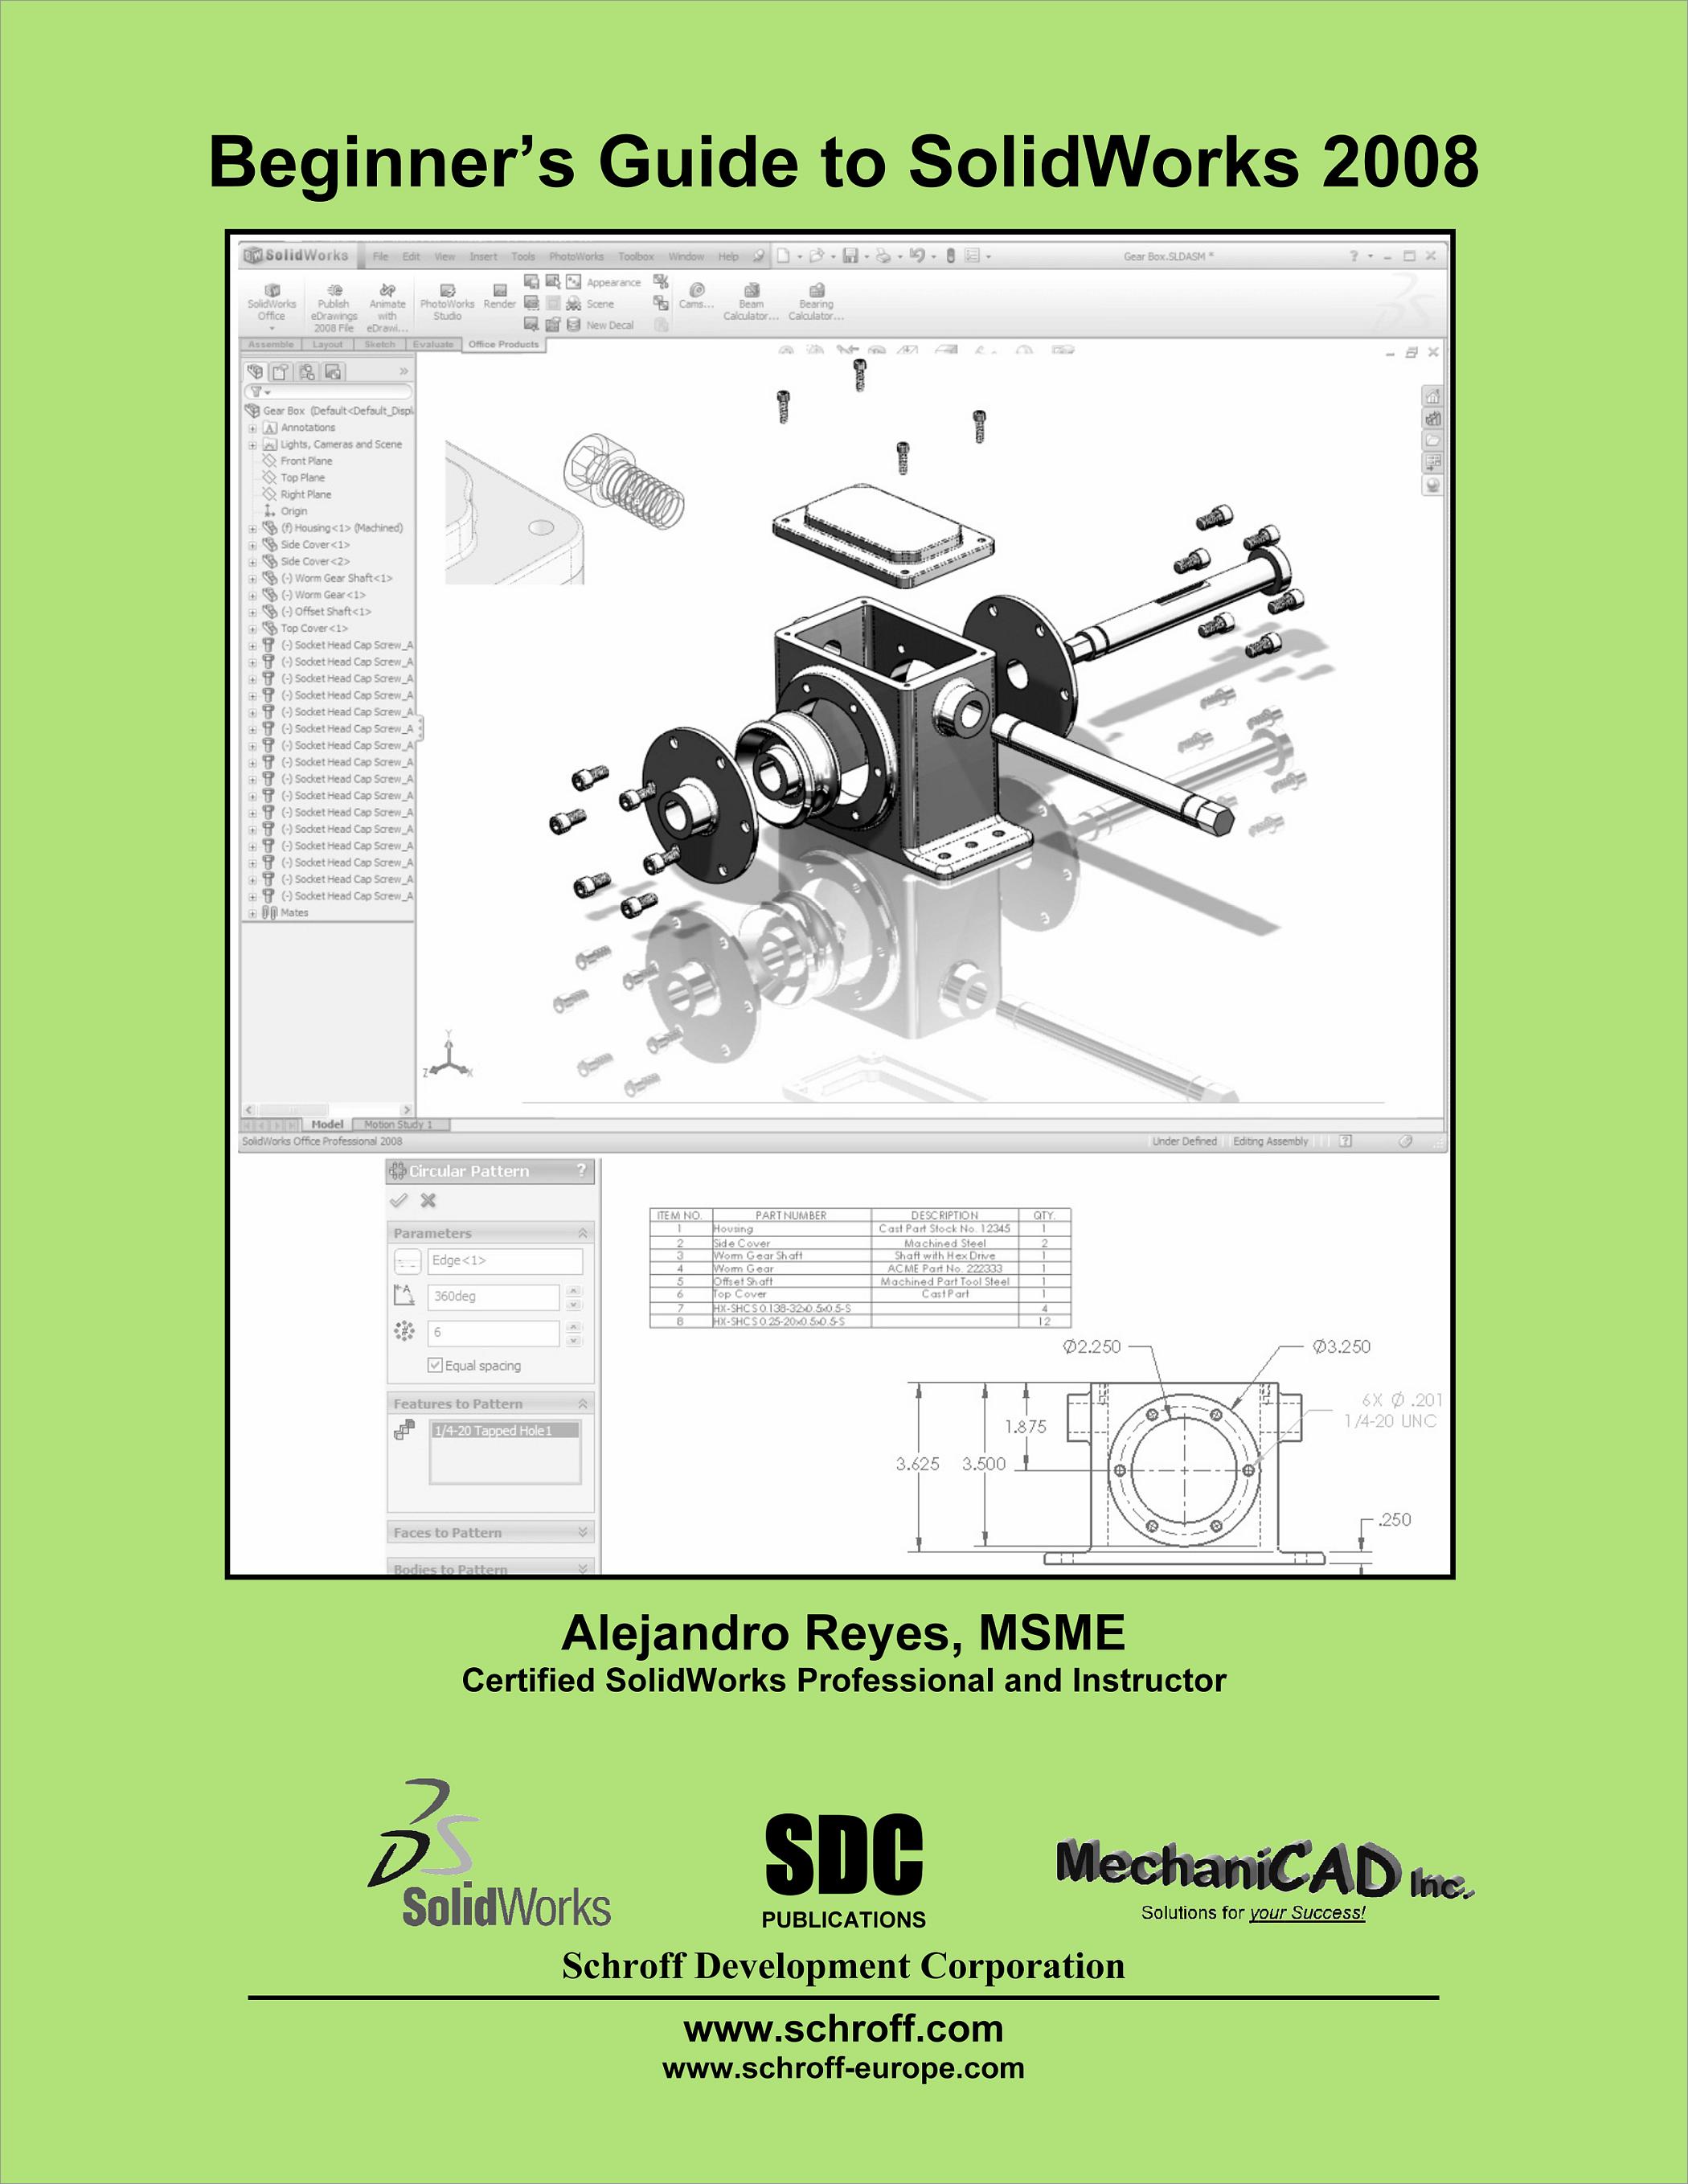 solidworks manual pdf download free